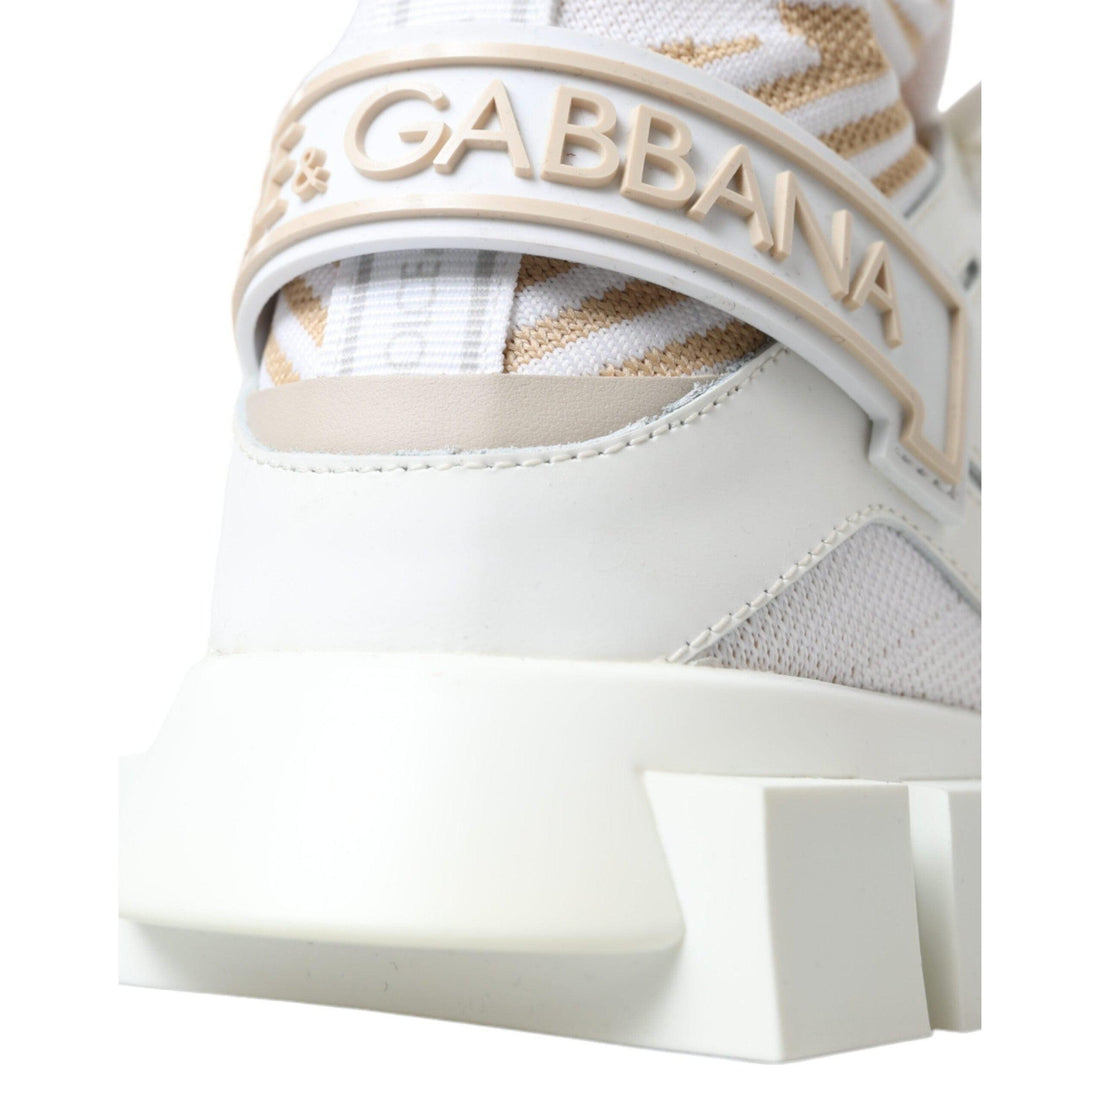 Dolce & Gabbana Elegant Sorrento Slip-On Sneakers in White and Beige